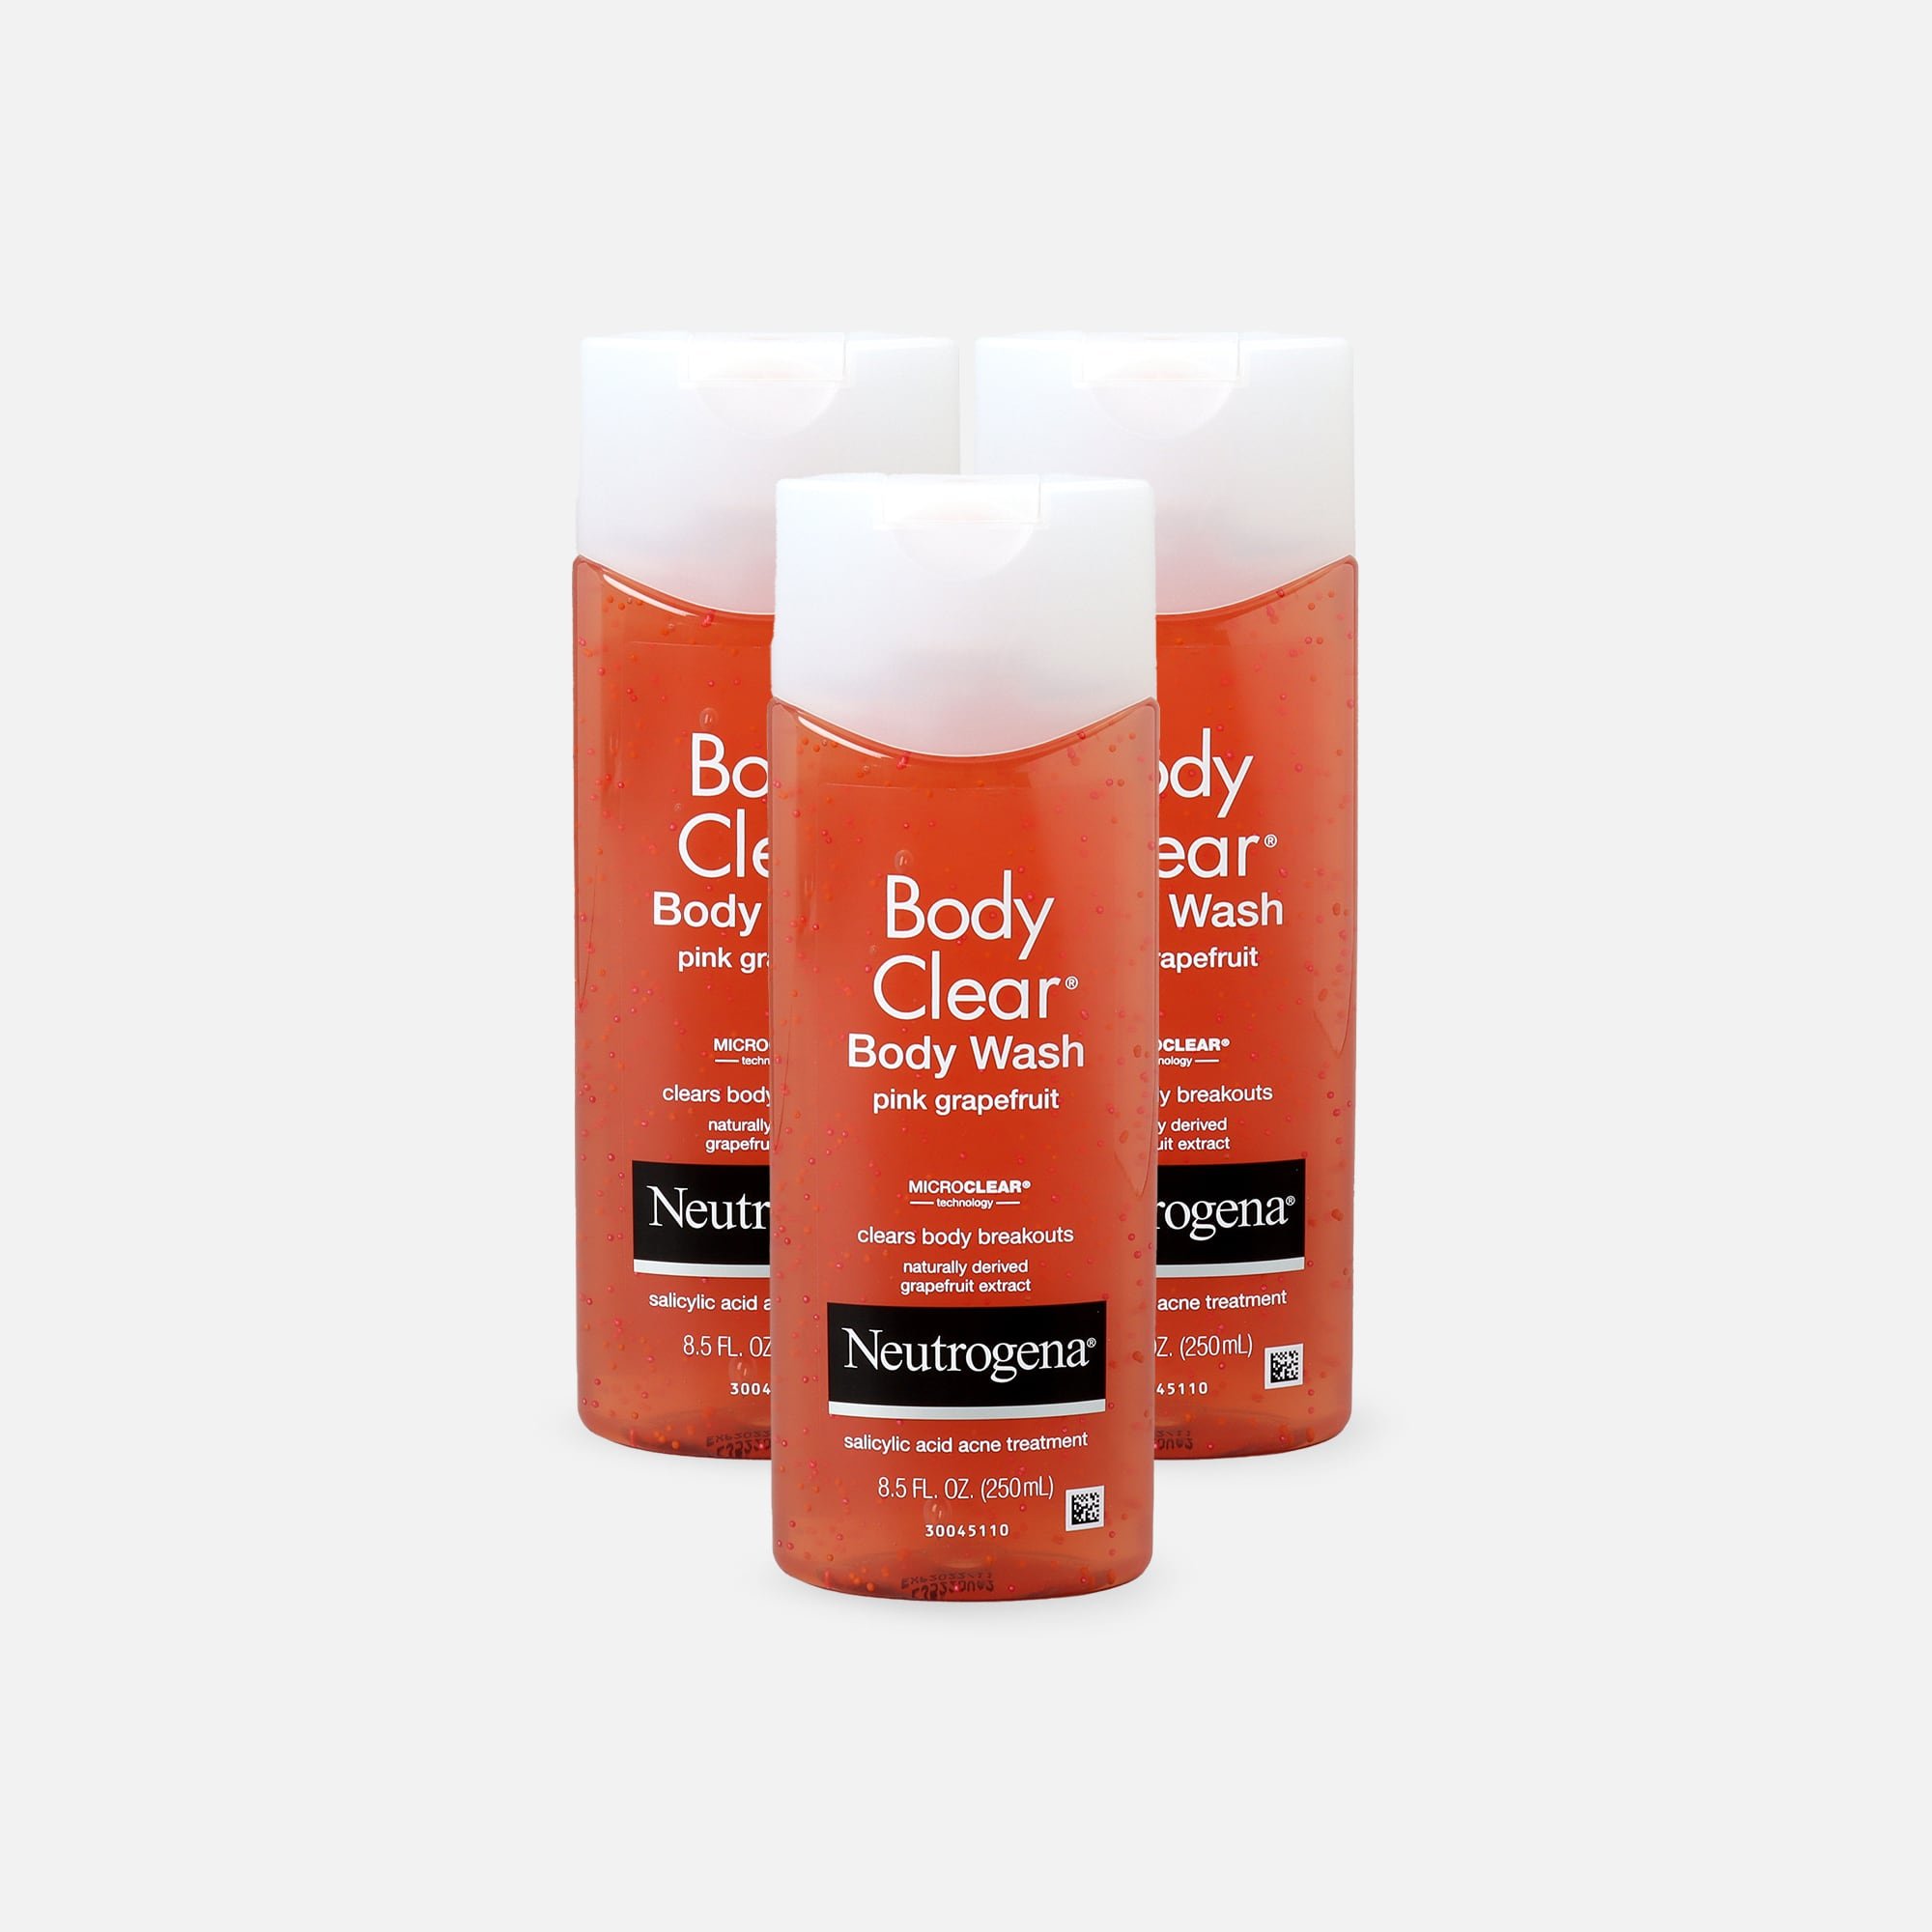 Tablet klon excitation Neutrogena Body Clear Pink Grapefruit Body Wash, 8.5 oz. (3-Pack)